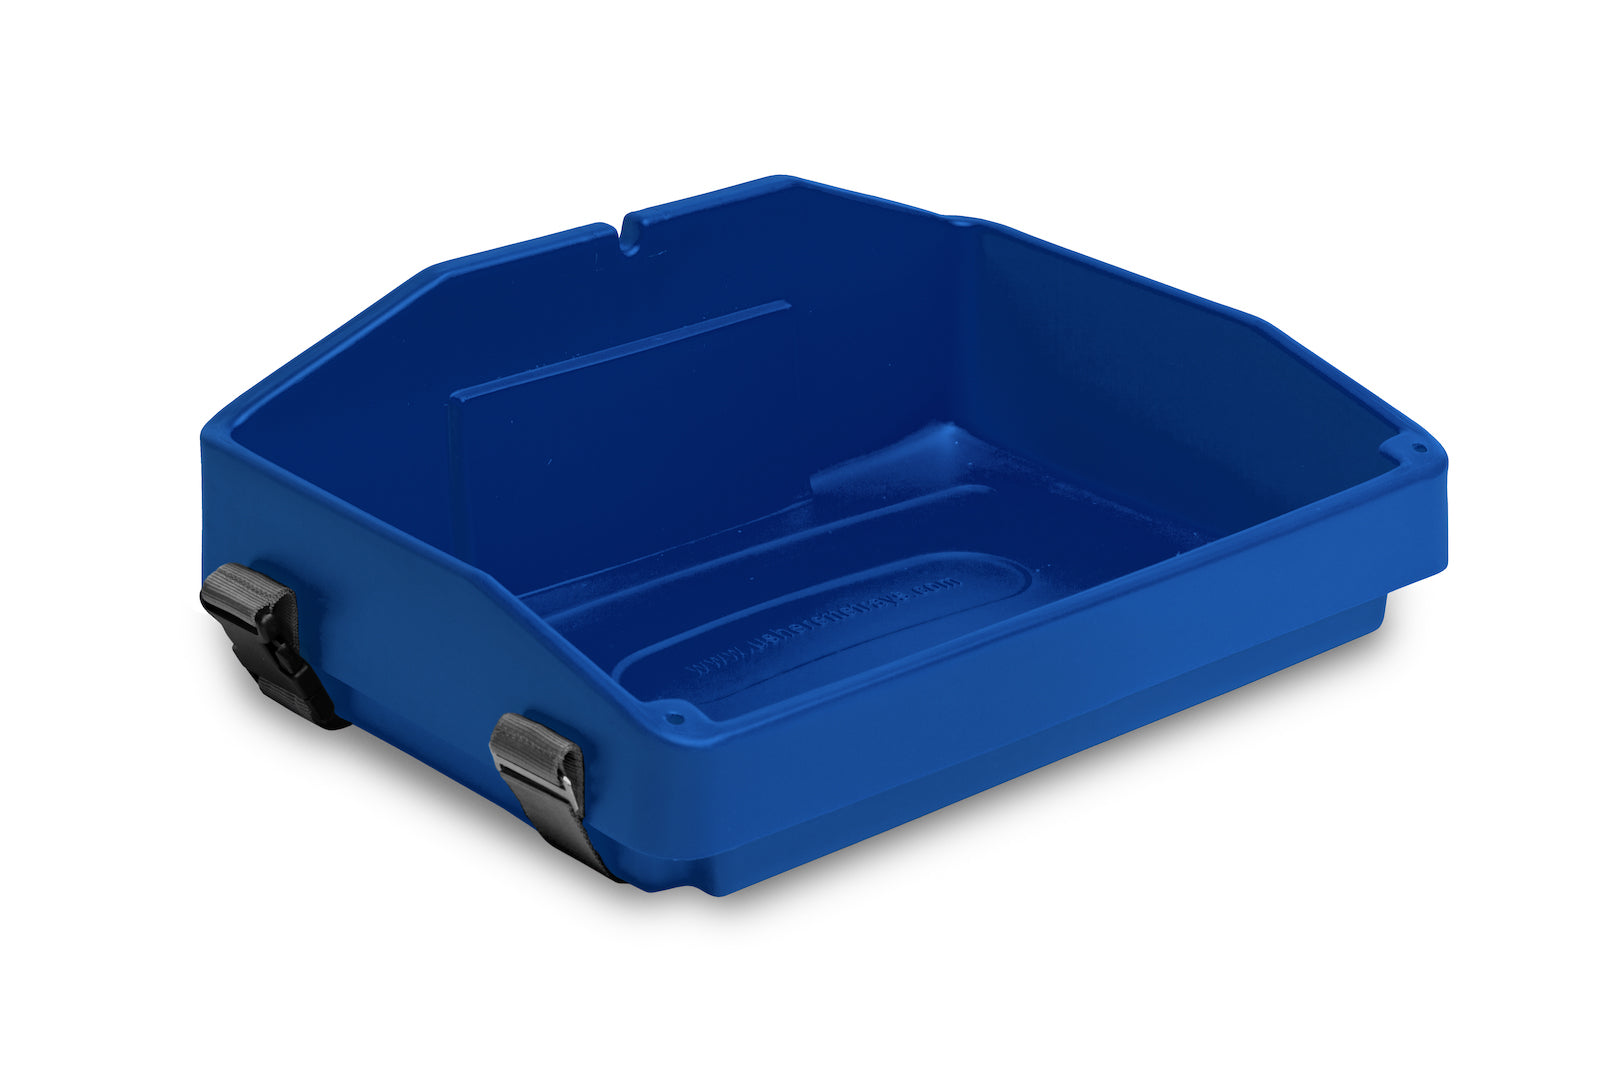 Royal blue plastic usherette tray